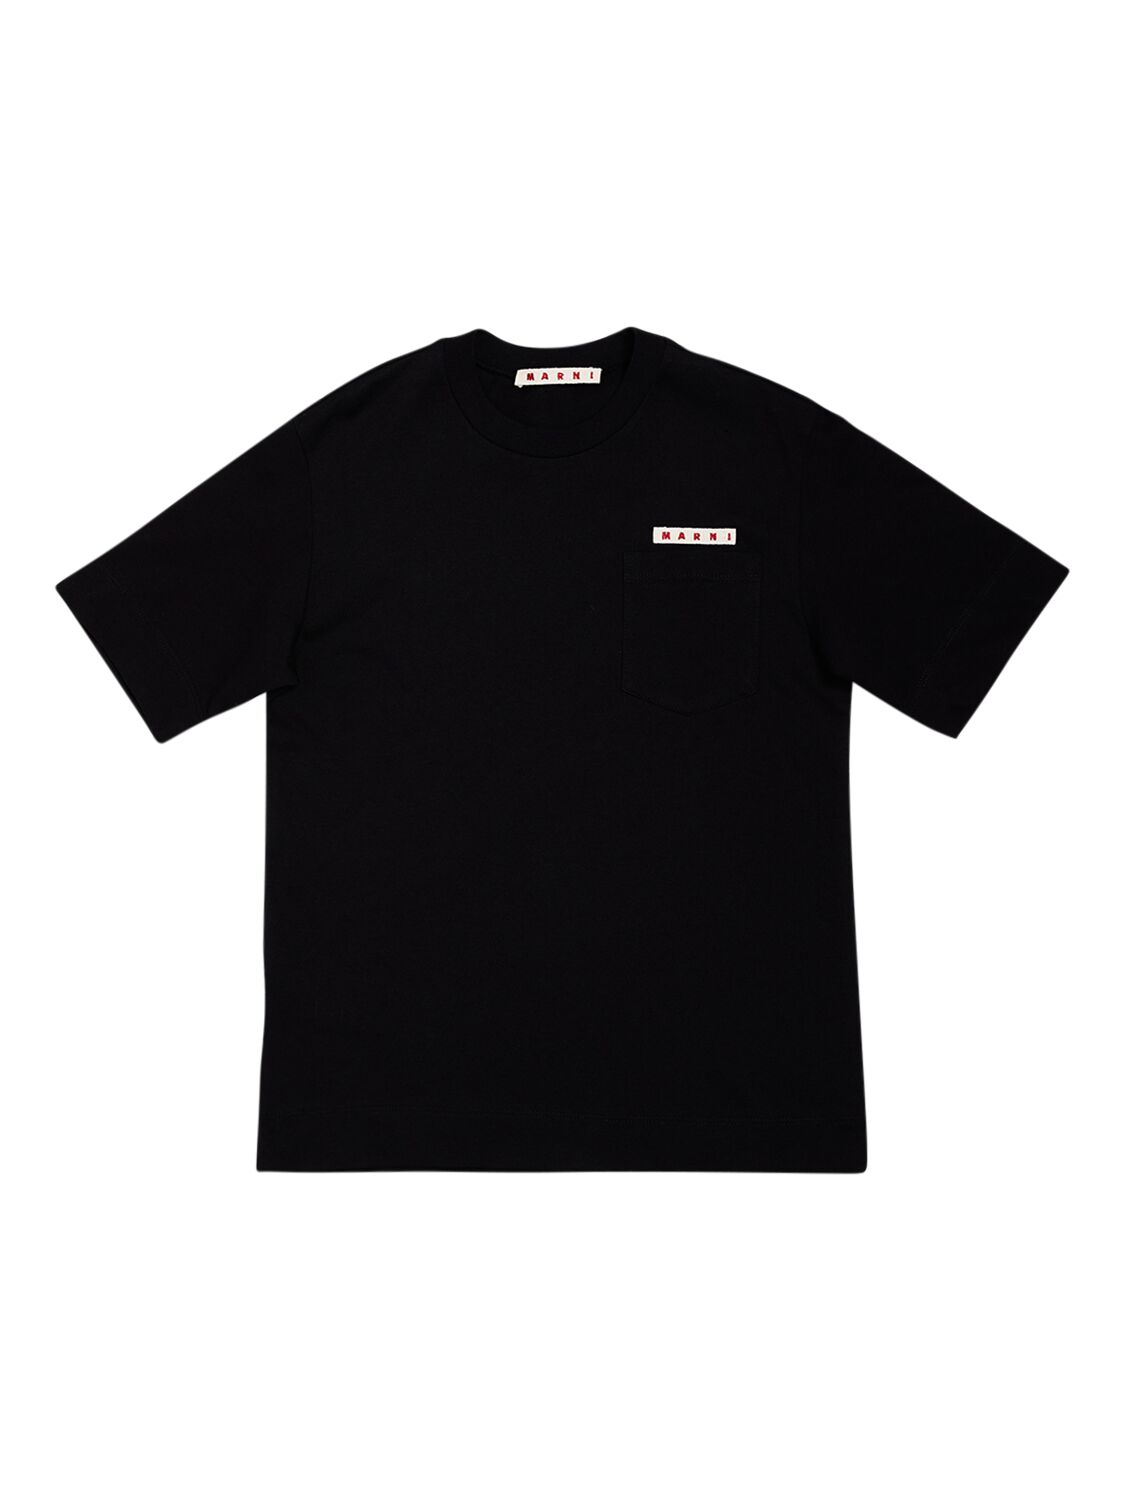 Marni Junior Kids' Logo Print Cotton Jersey T-shirt In Black